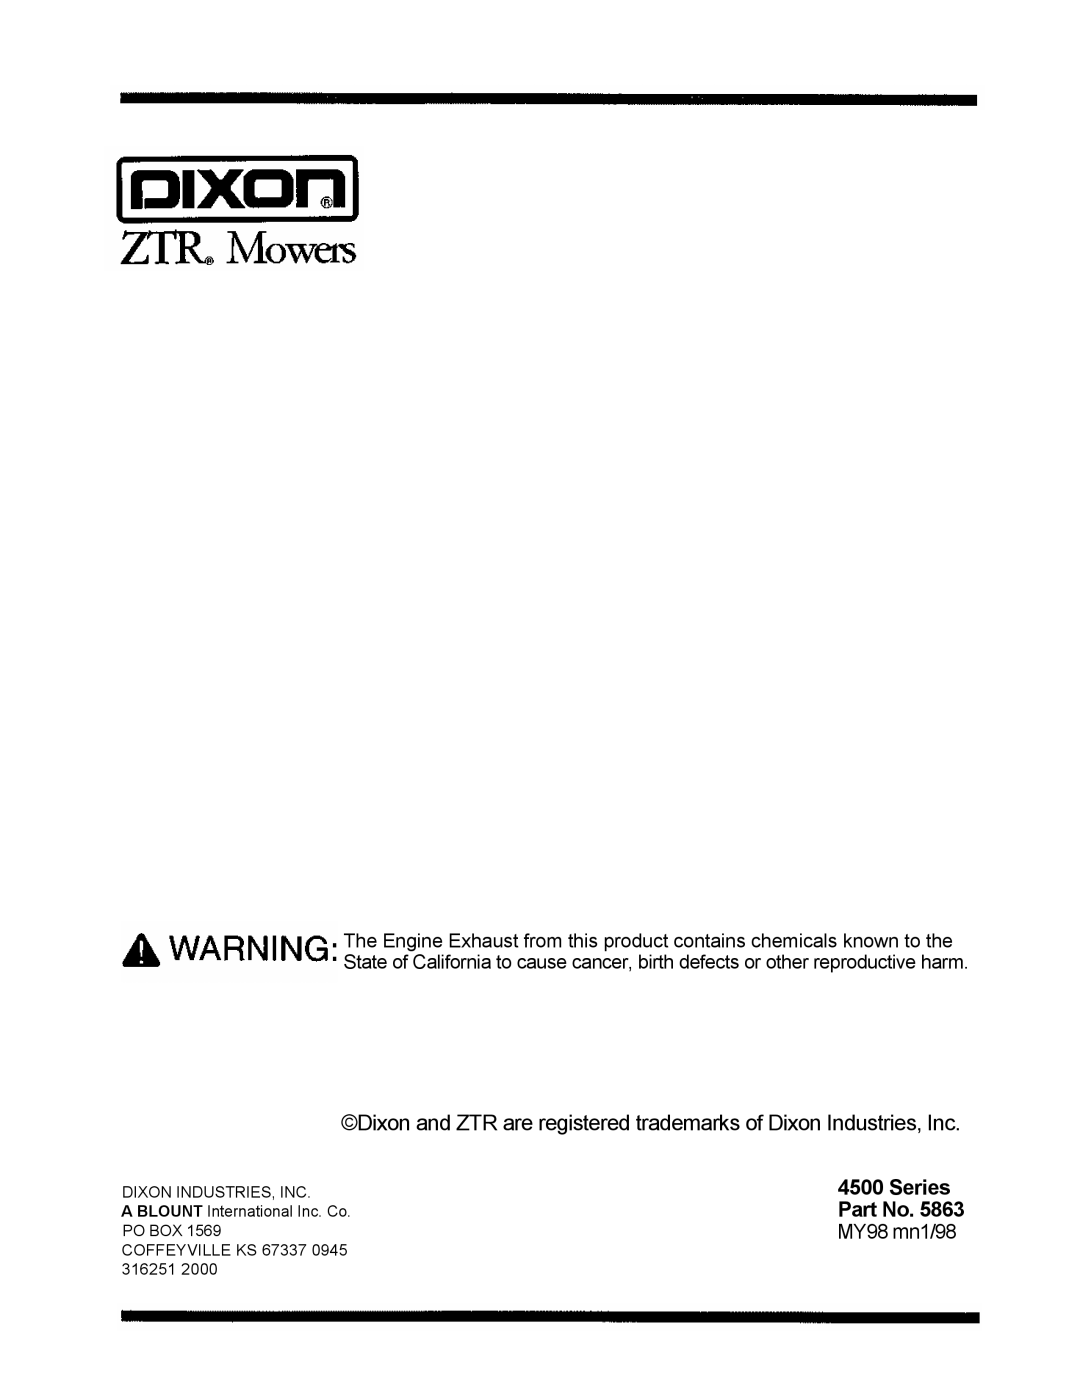 Dixon 4500 Series manual Dixon and ZTR are registered trademarks of Dixon Industries, Inc, Series Part No 